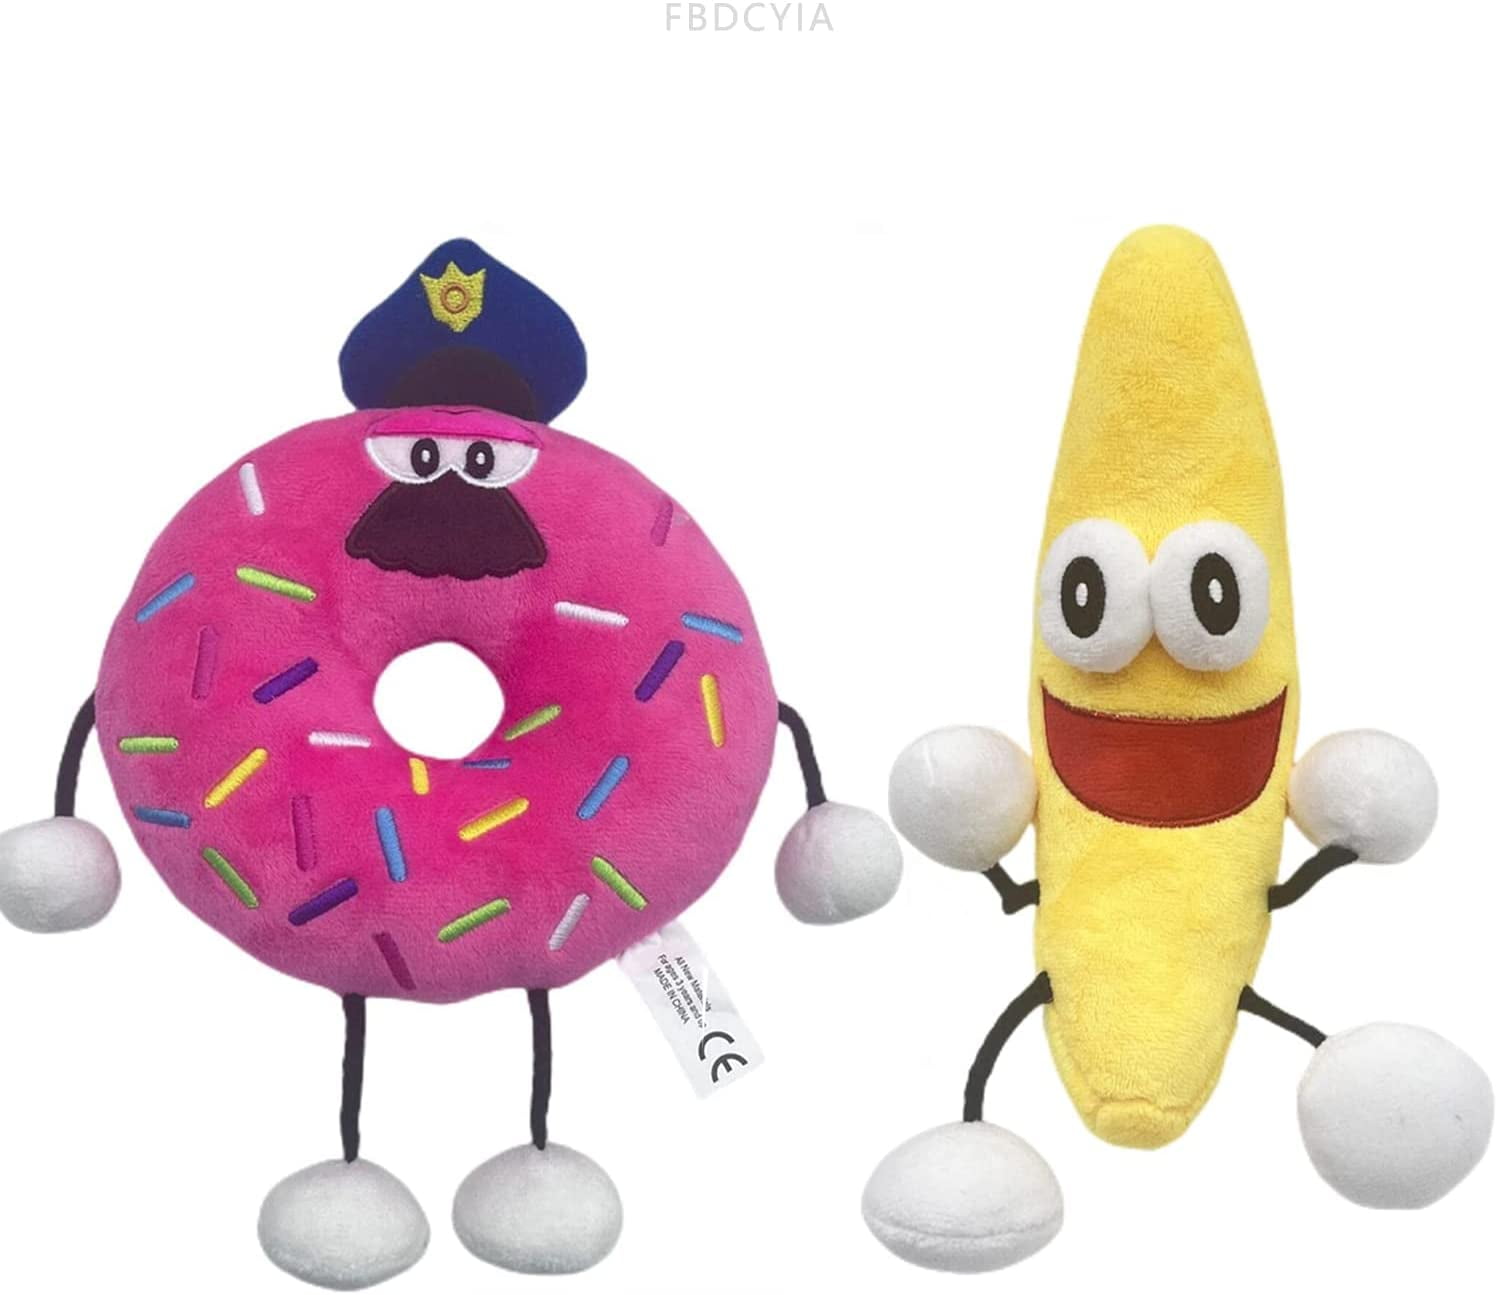 Roblox Shovelware's Brain Game Fans Banana & Apple Plush Toys